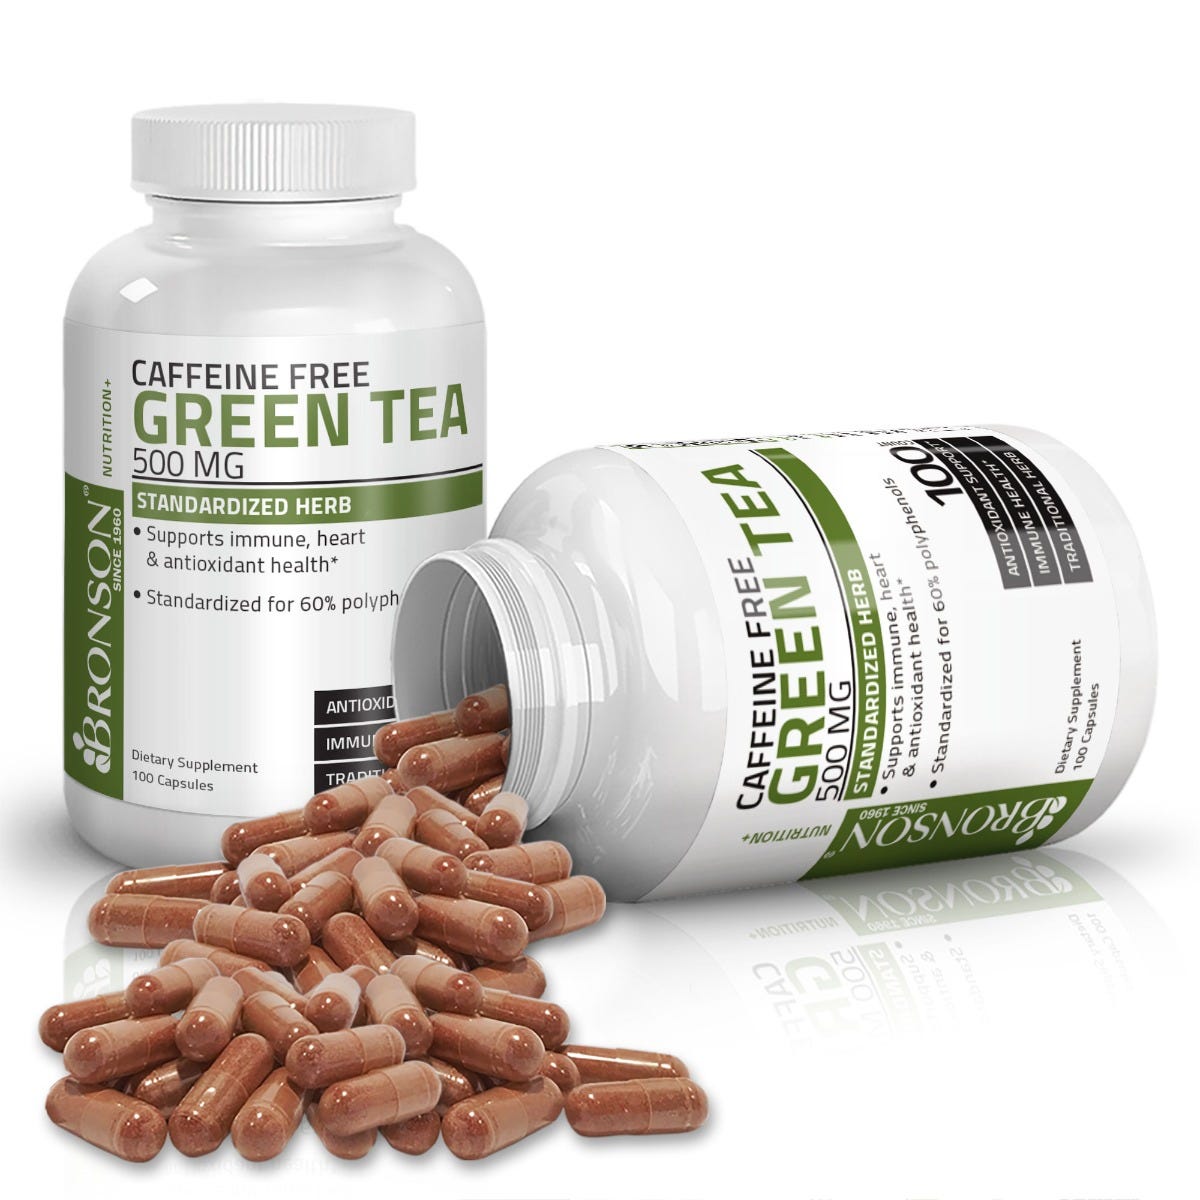 Caffeine Free Green Tea Extract - 500 mg - 100 Capsules